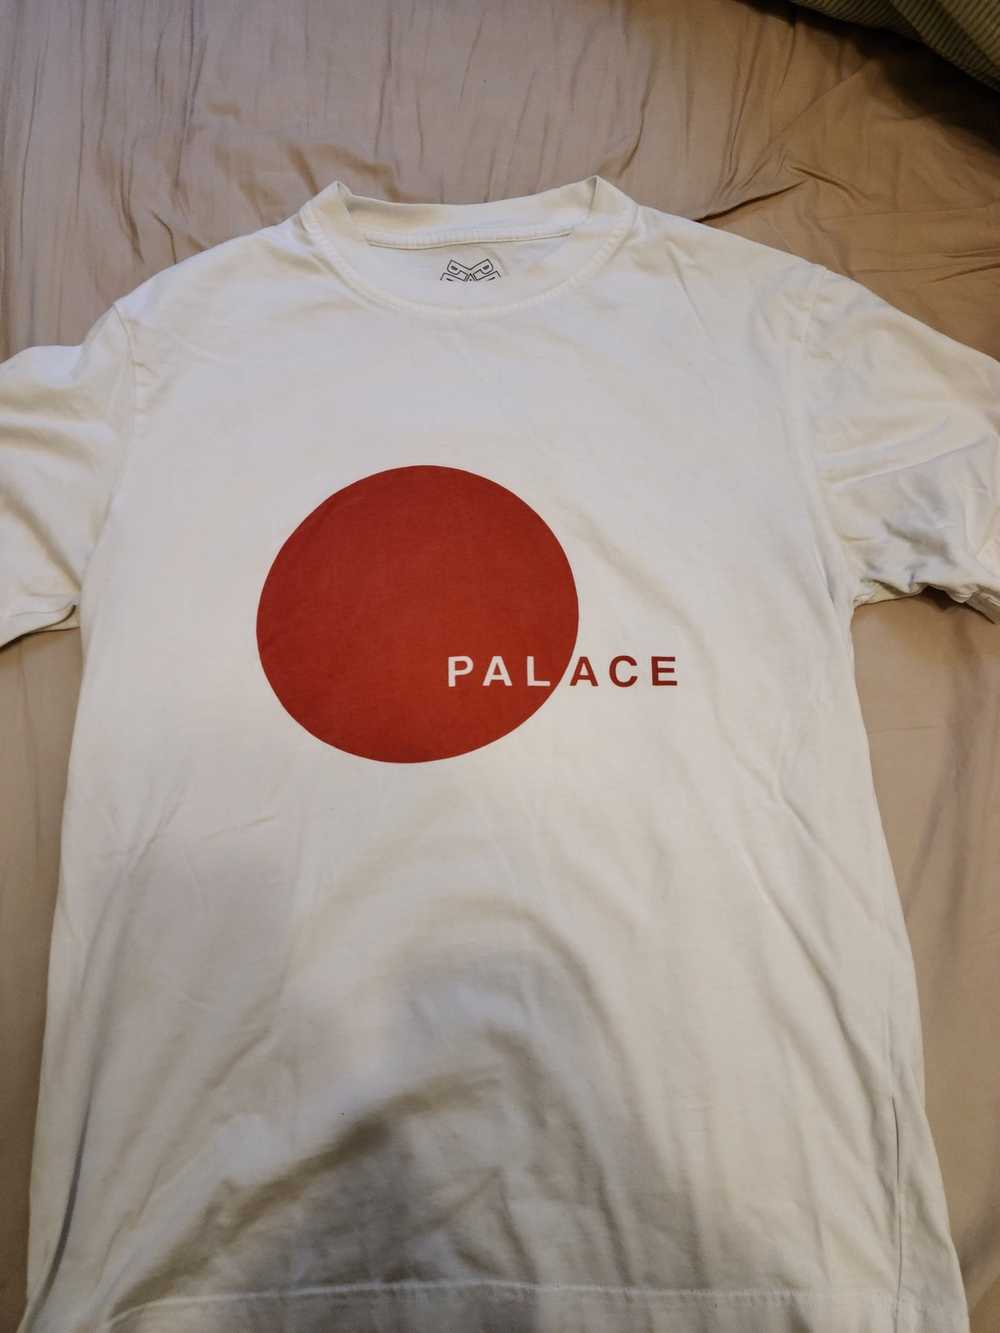 Palace Spot Shirt - image 1